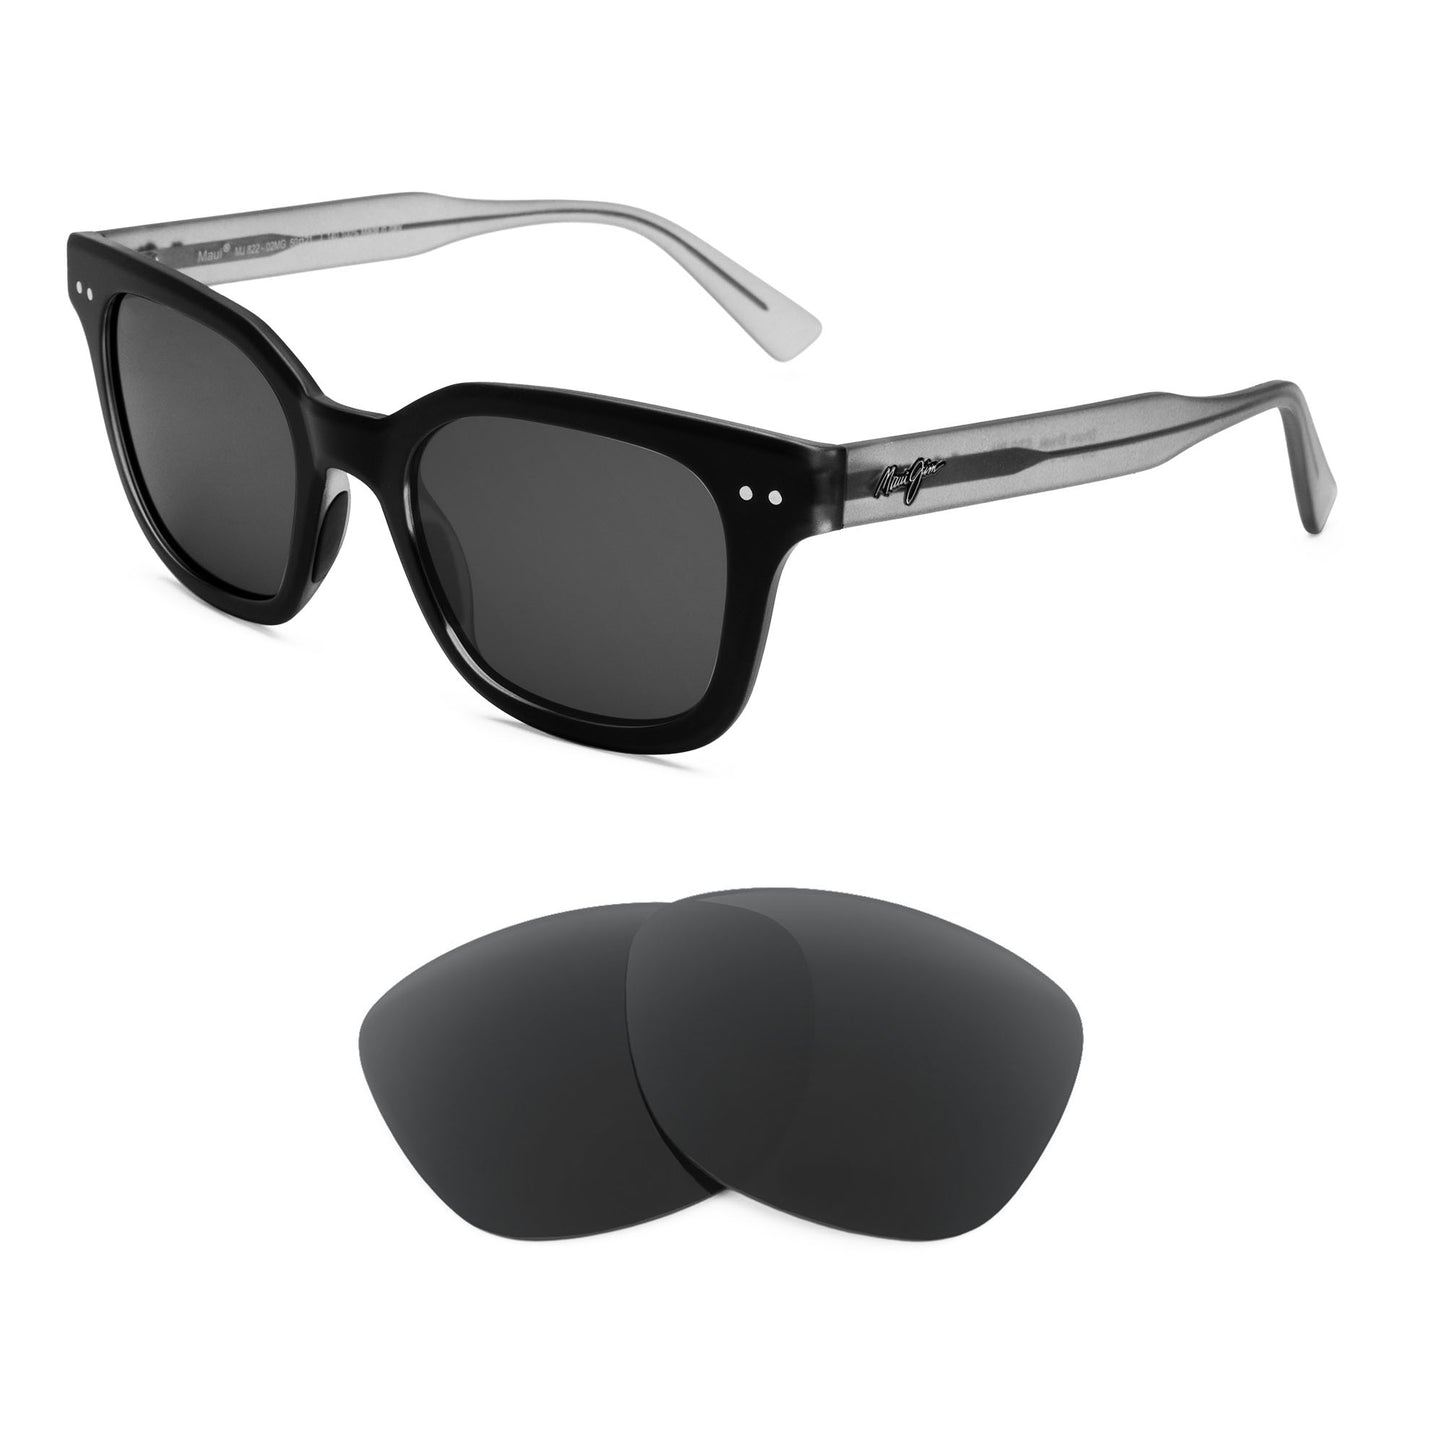 Maui Jim Shore Break MJ822 sunglasses with replacement lenses